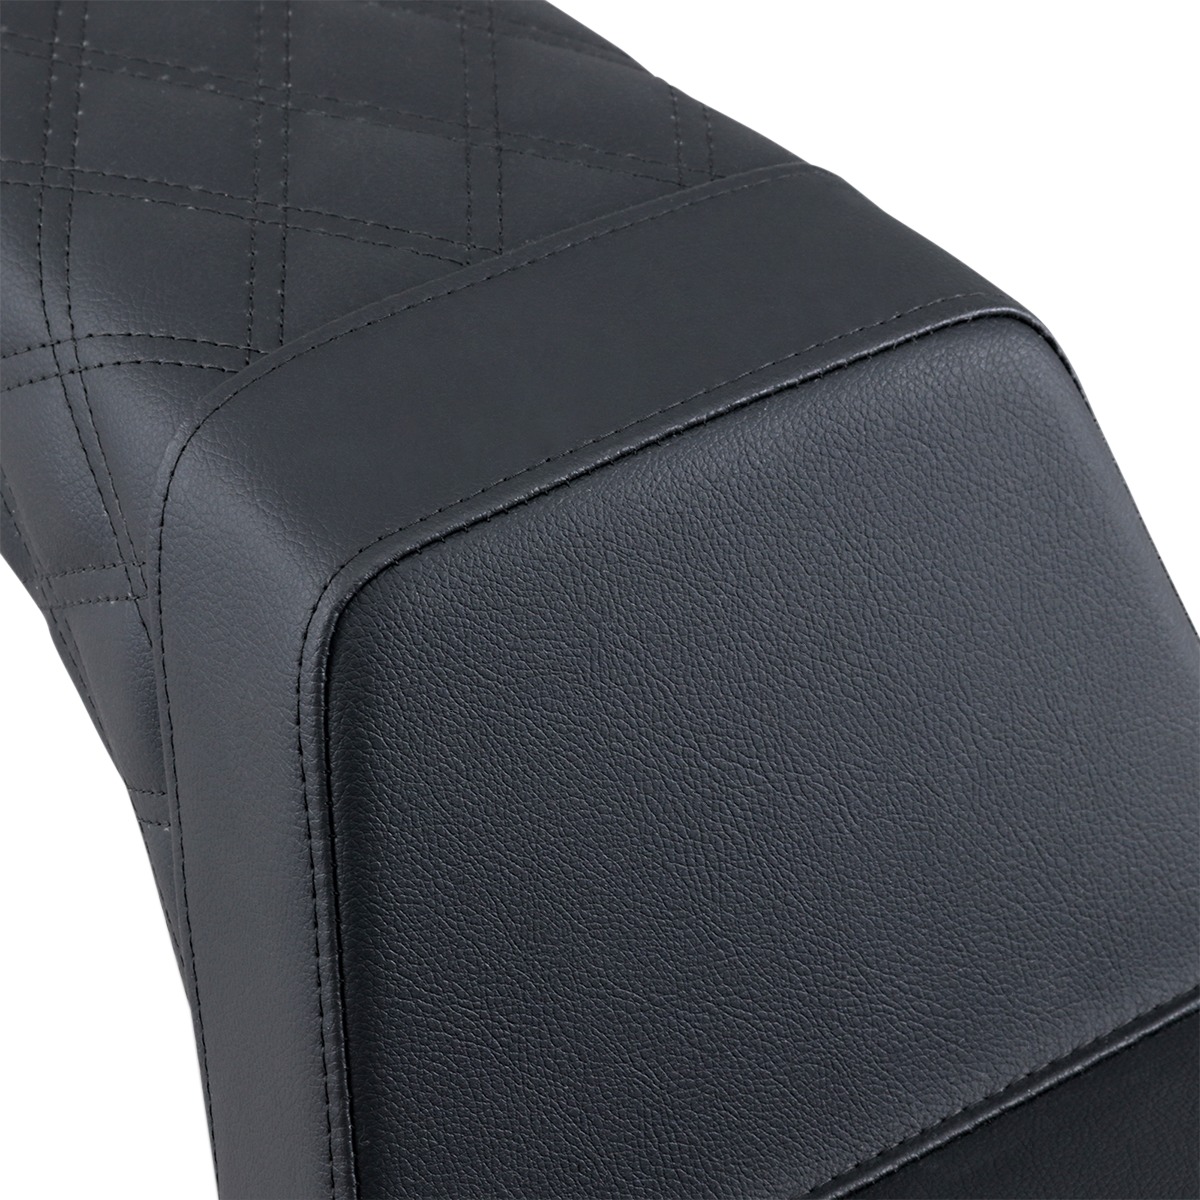 Step-Up Rear Lattice Stitch 2-Up Seat - Black - For 13-19 Yamaha XVS950 Bolt - Click Image to Close